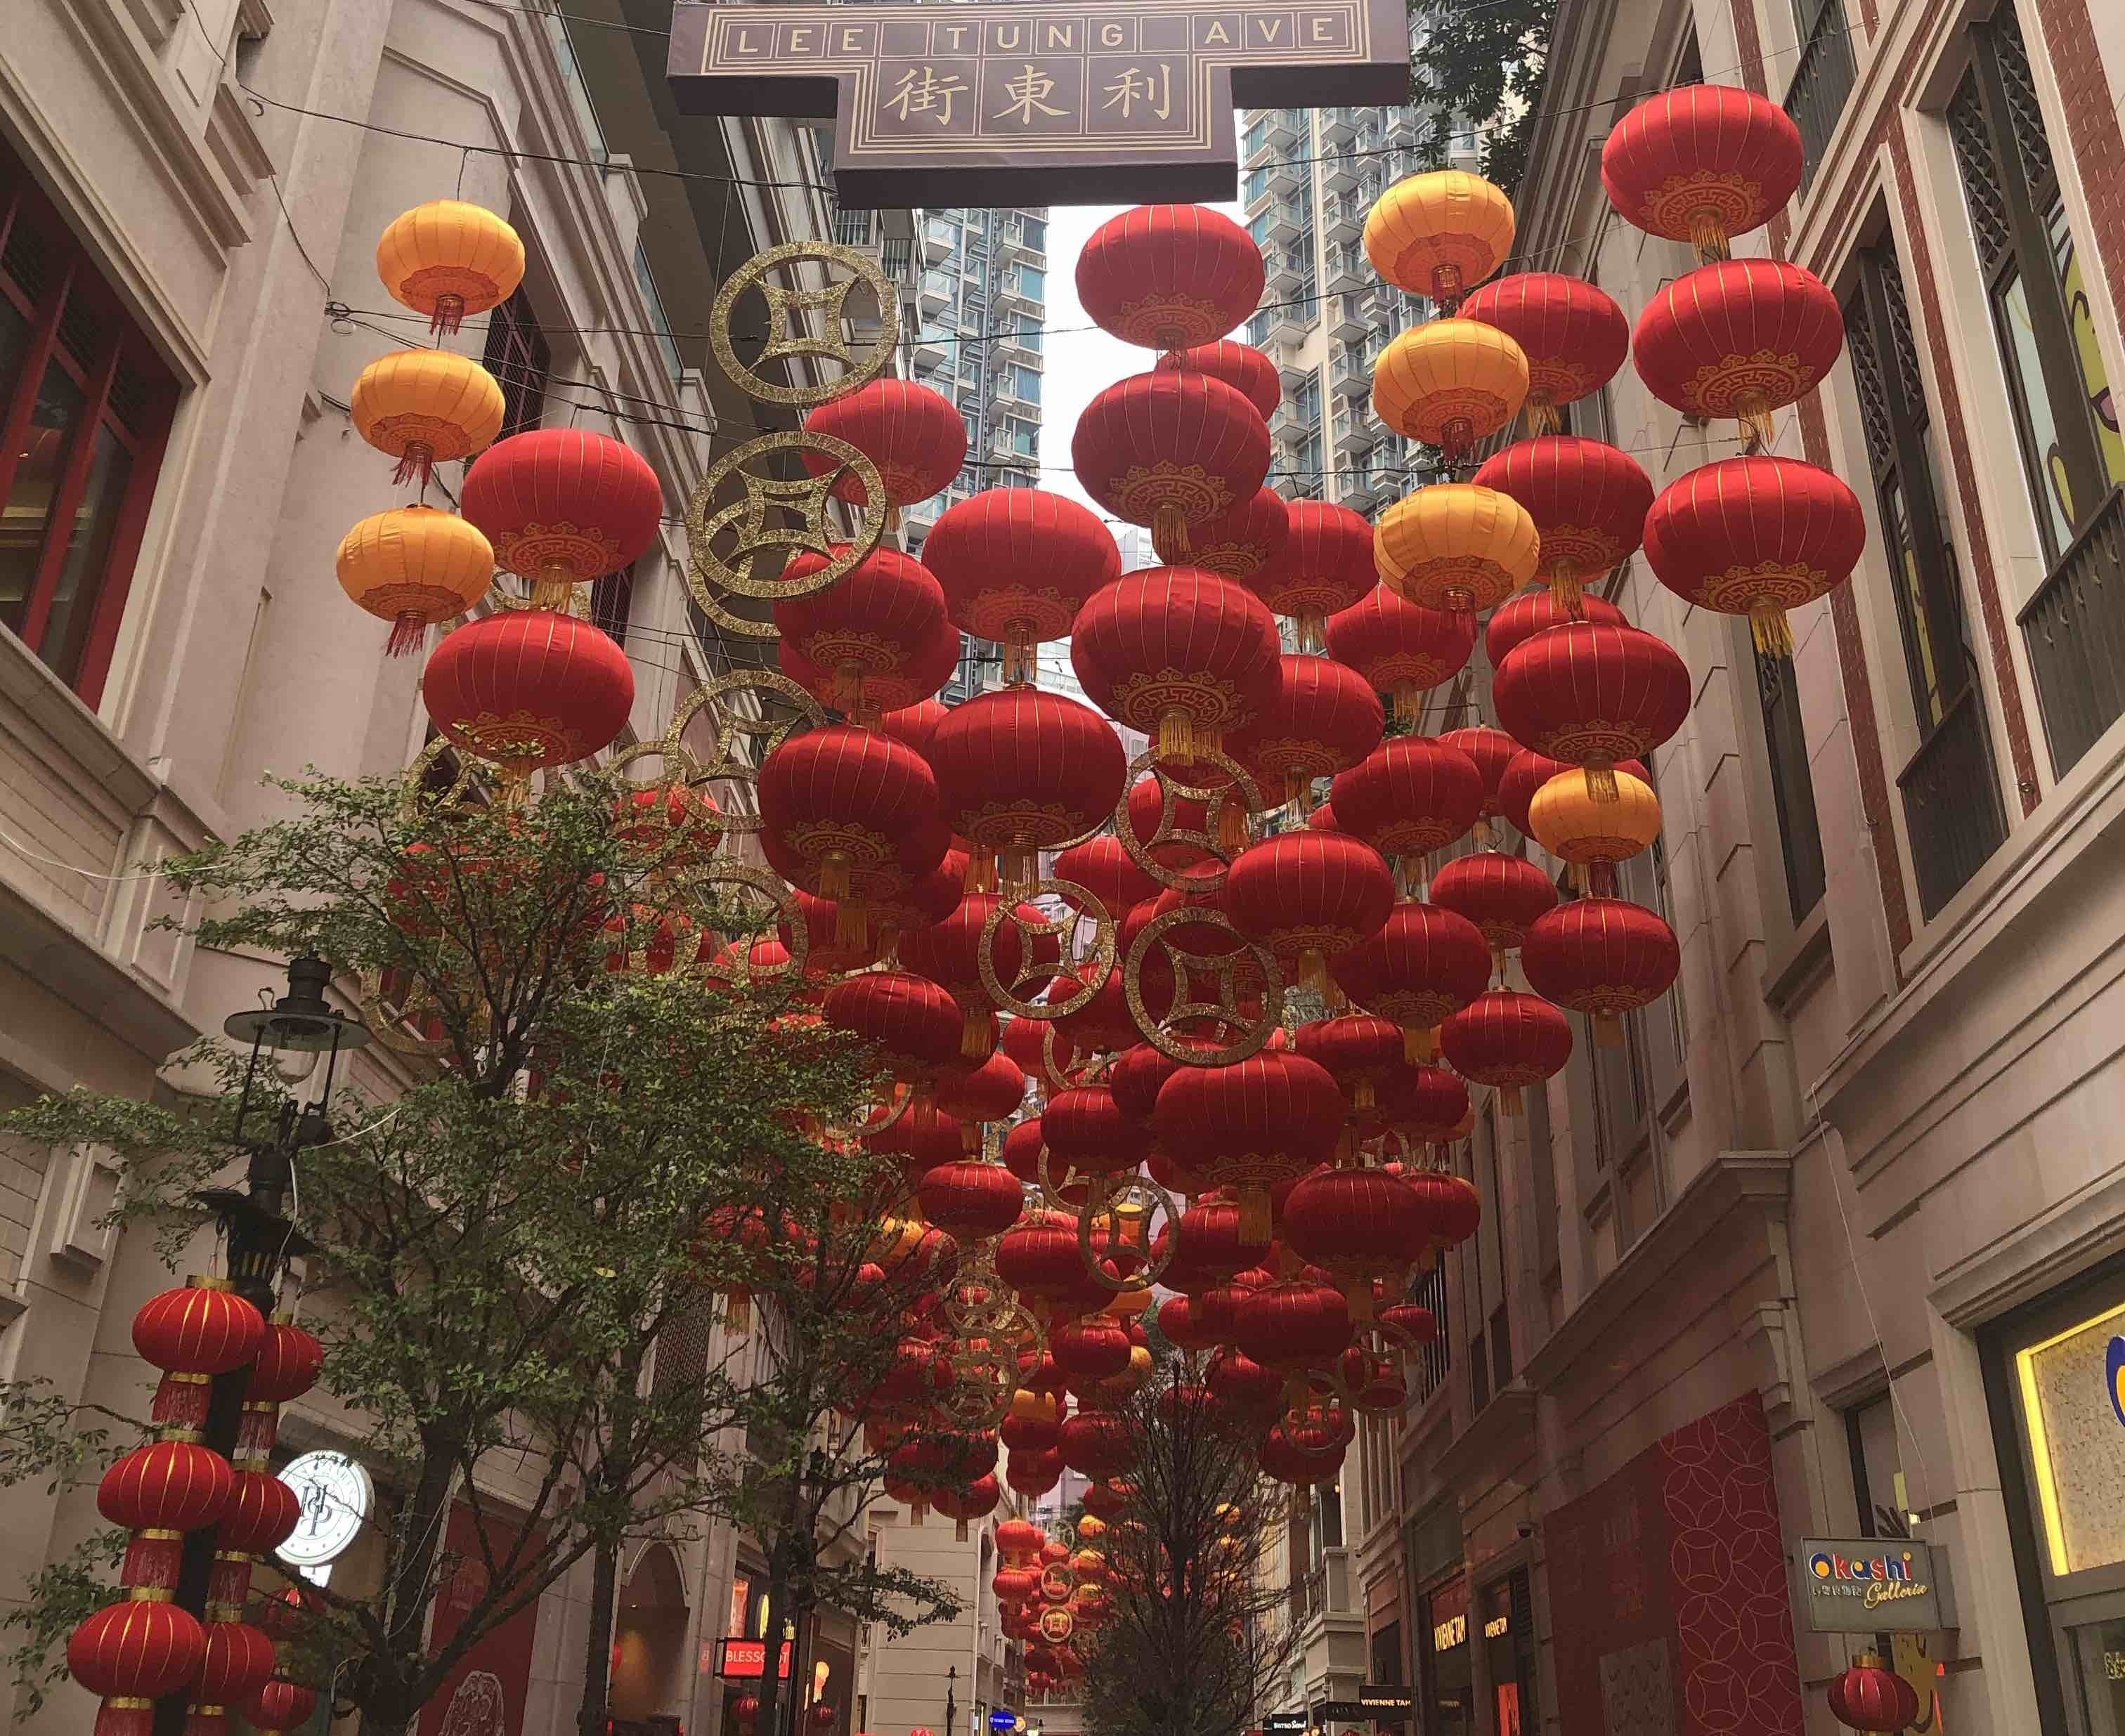 Galleria Dallas celebrates Lunar New Year with lantern exhibit